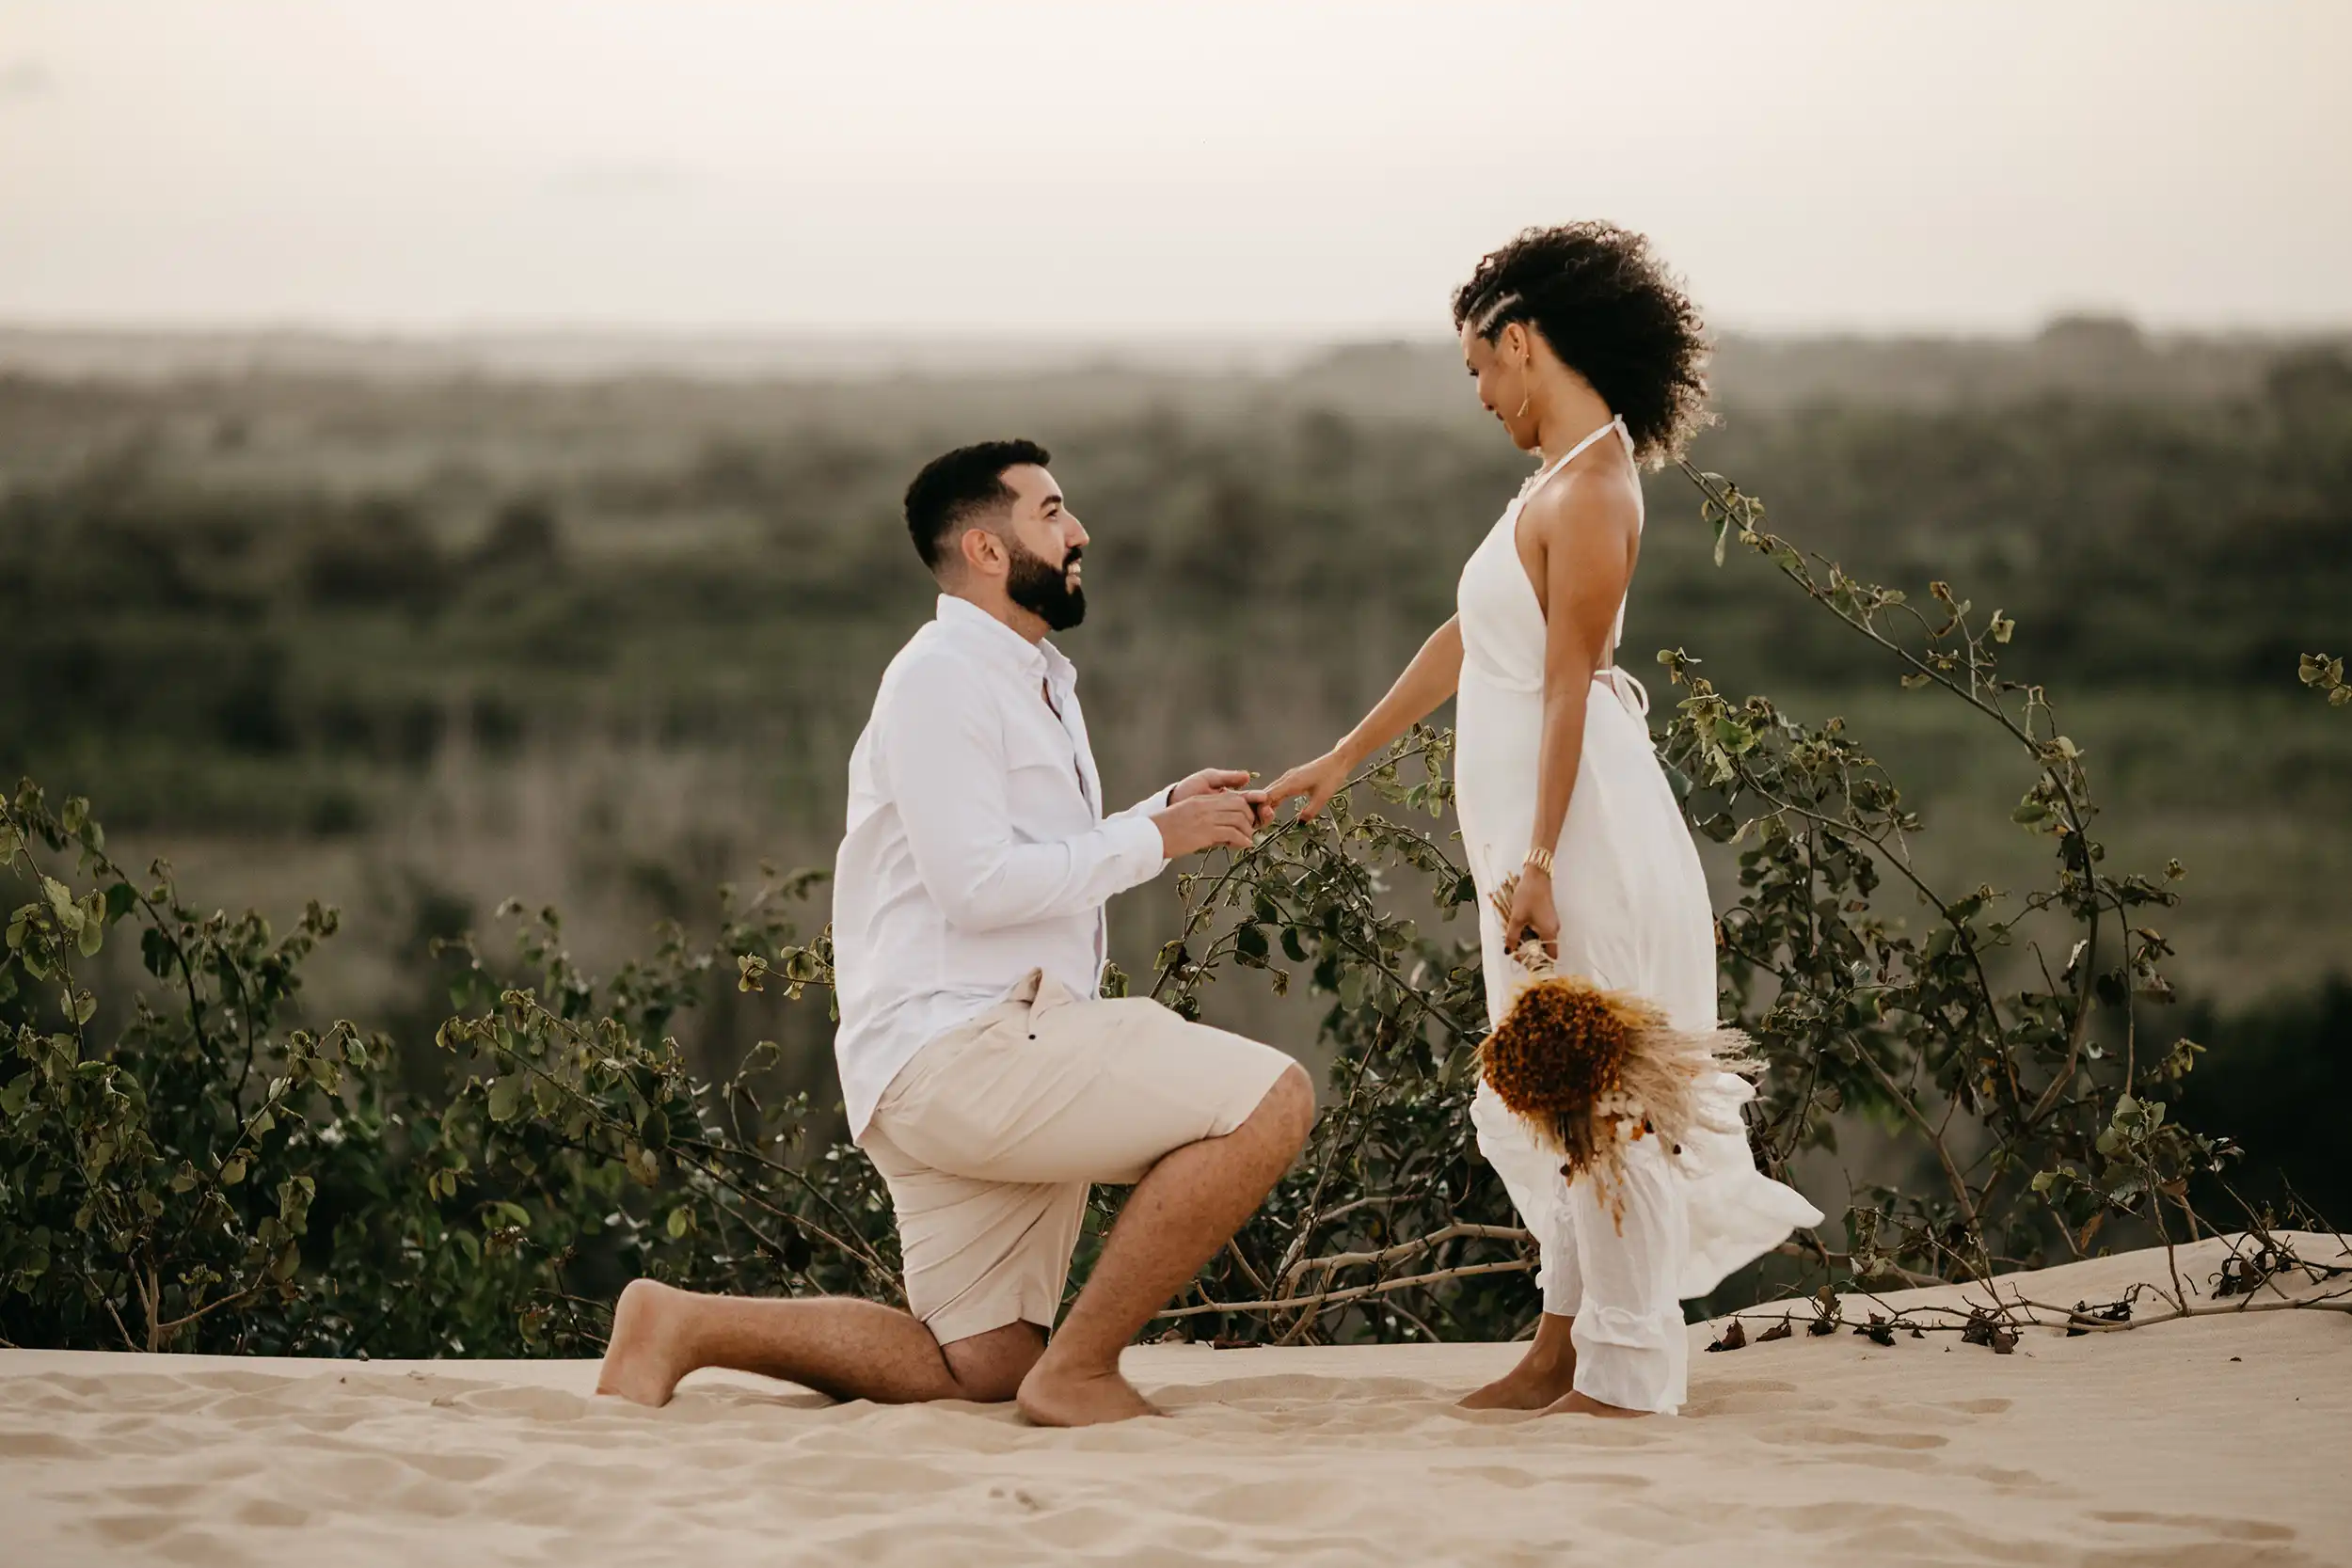 Marriage proposal at beach in Puerto Escondido